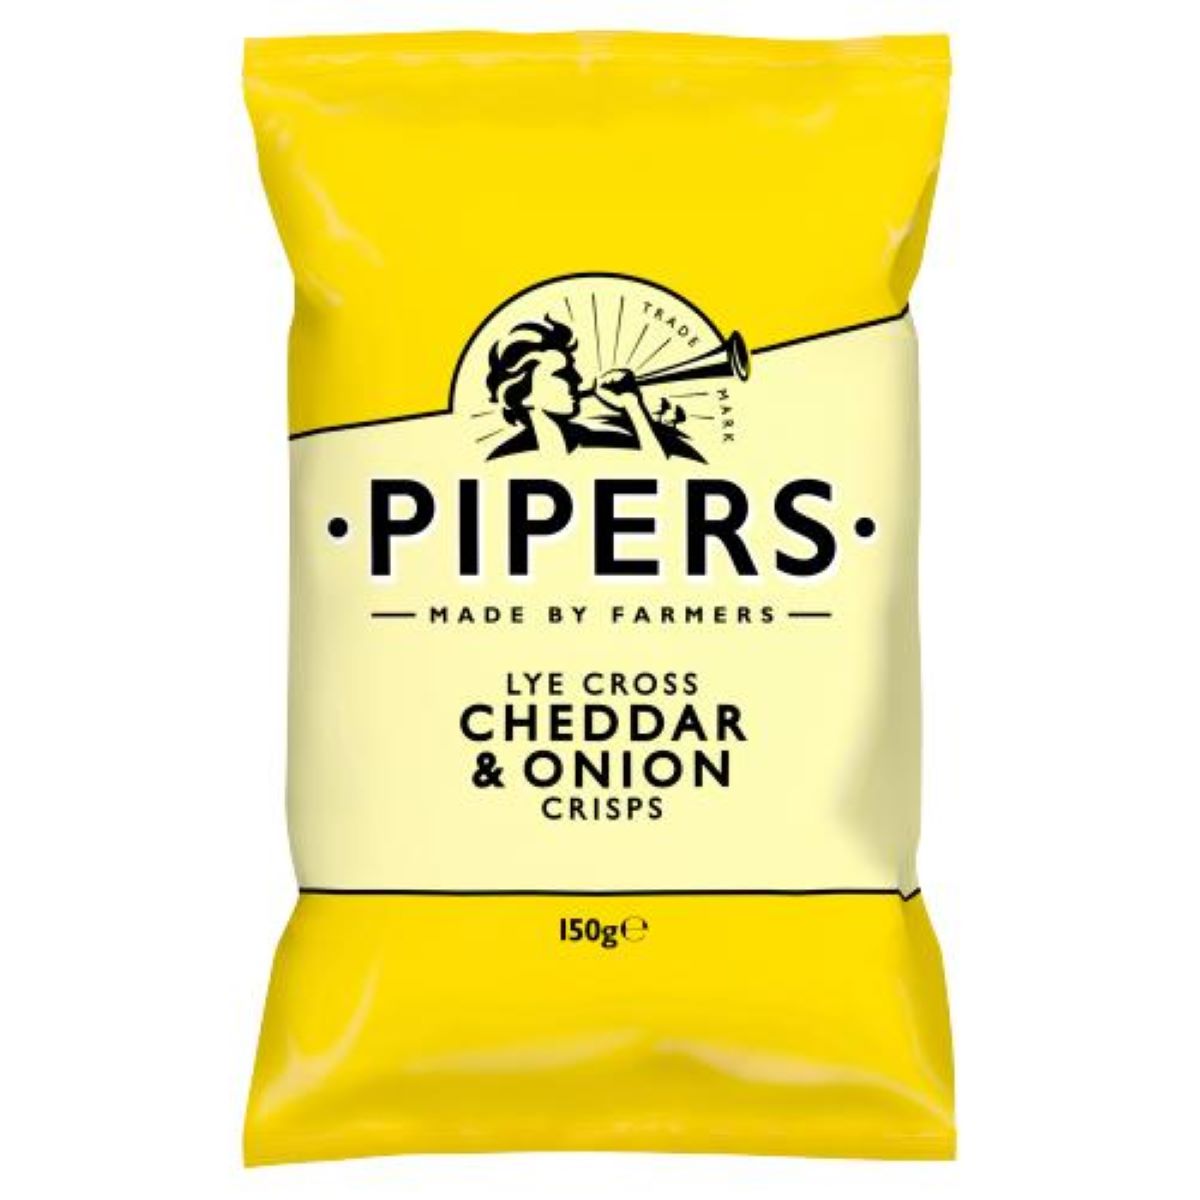 Pipers Lye Cross Cheddar & Onion Crisps 150g